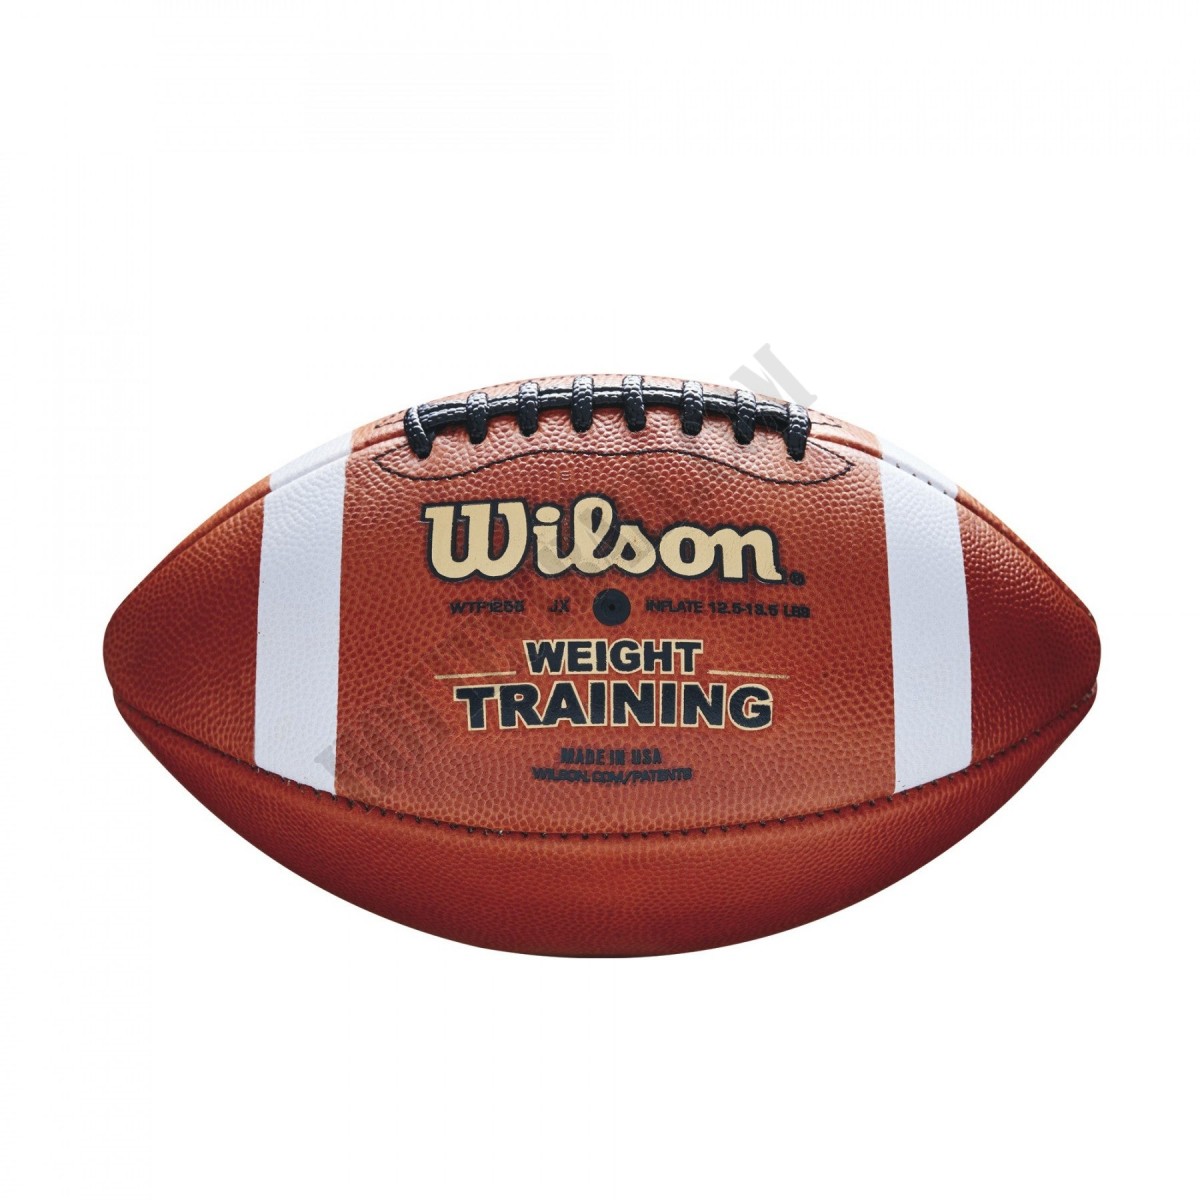 Weight Training Football - Wilson Discount Store - -1